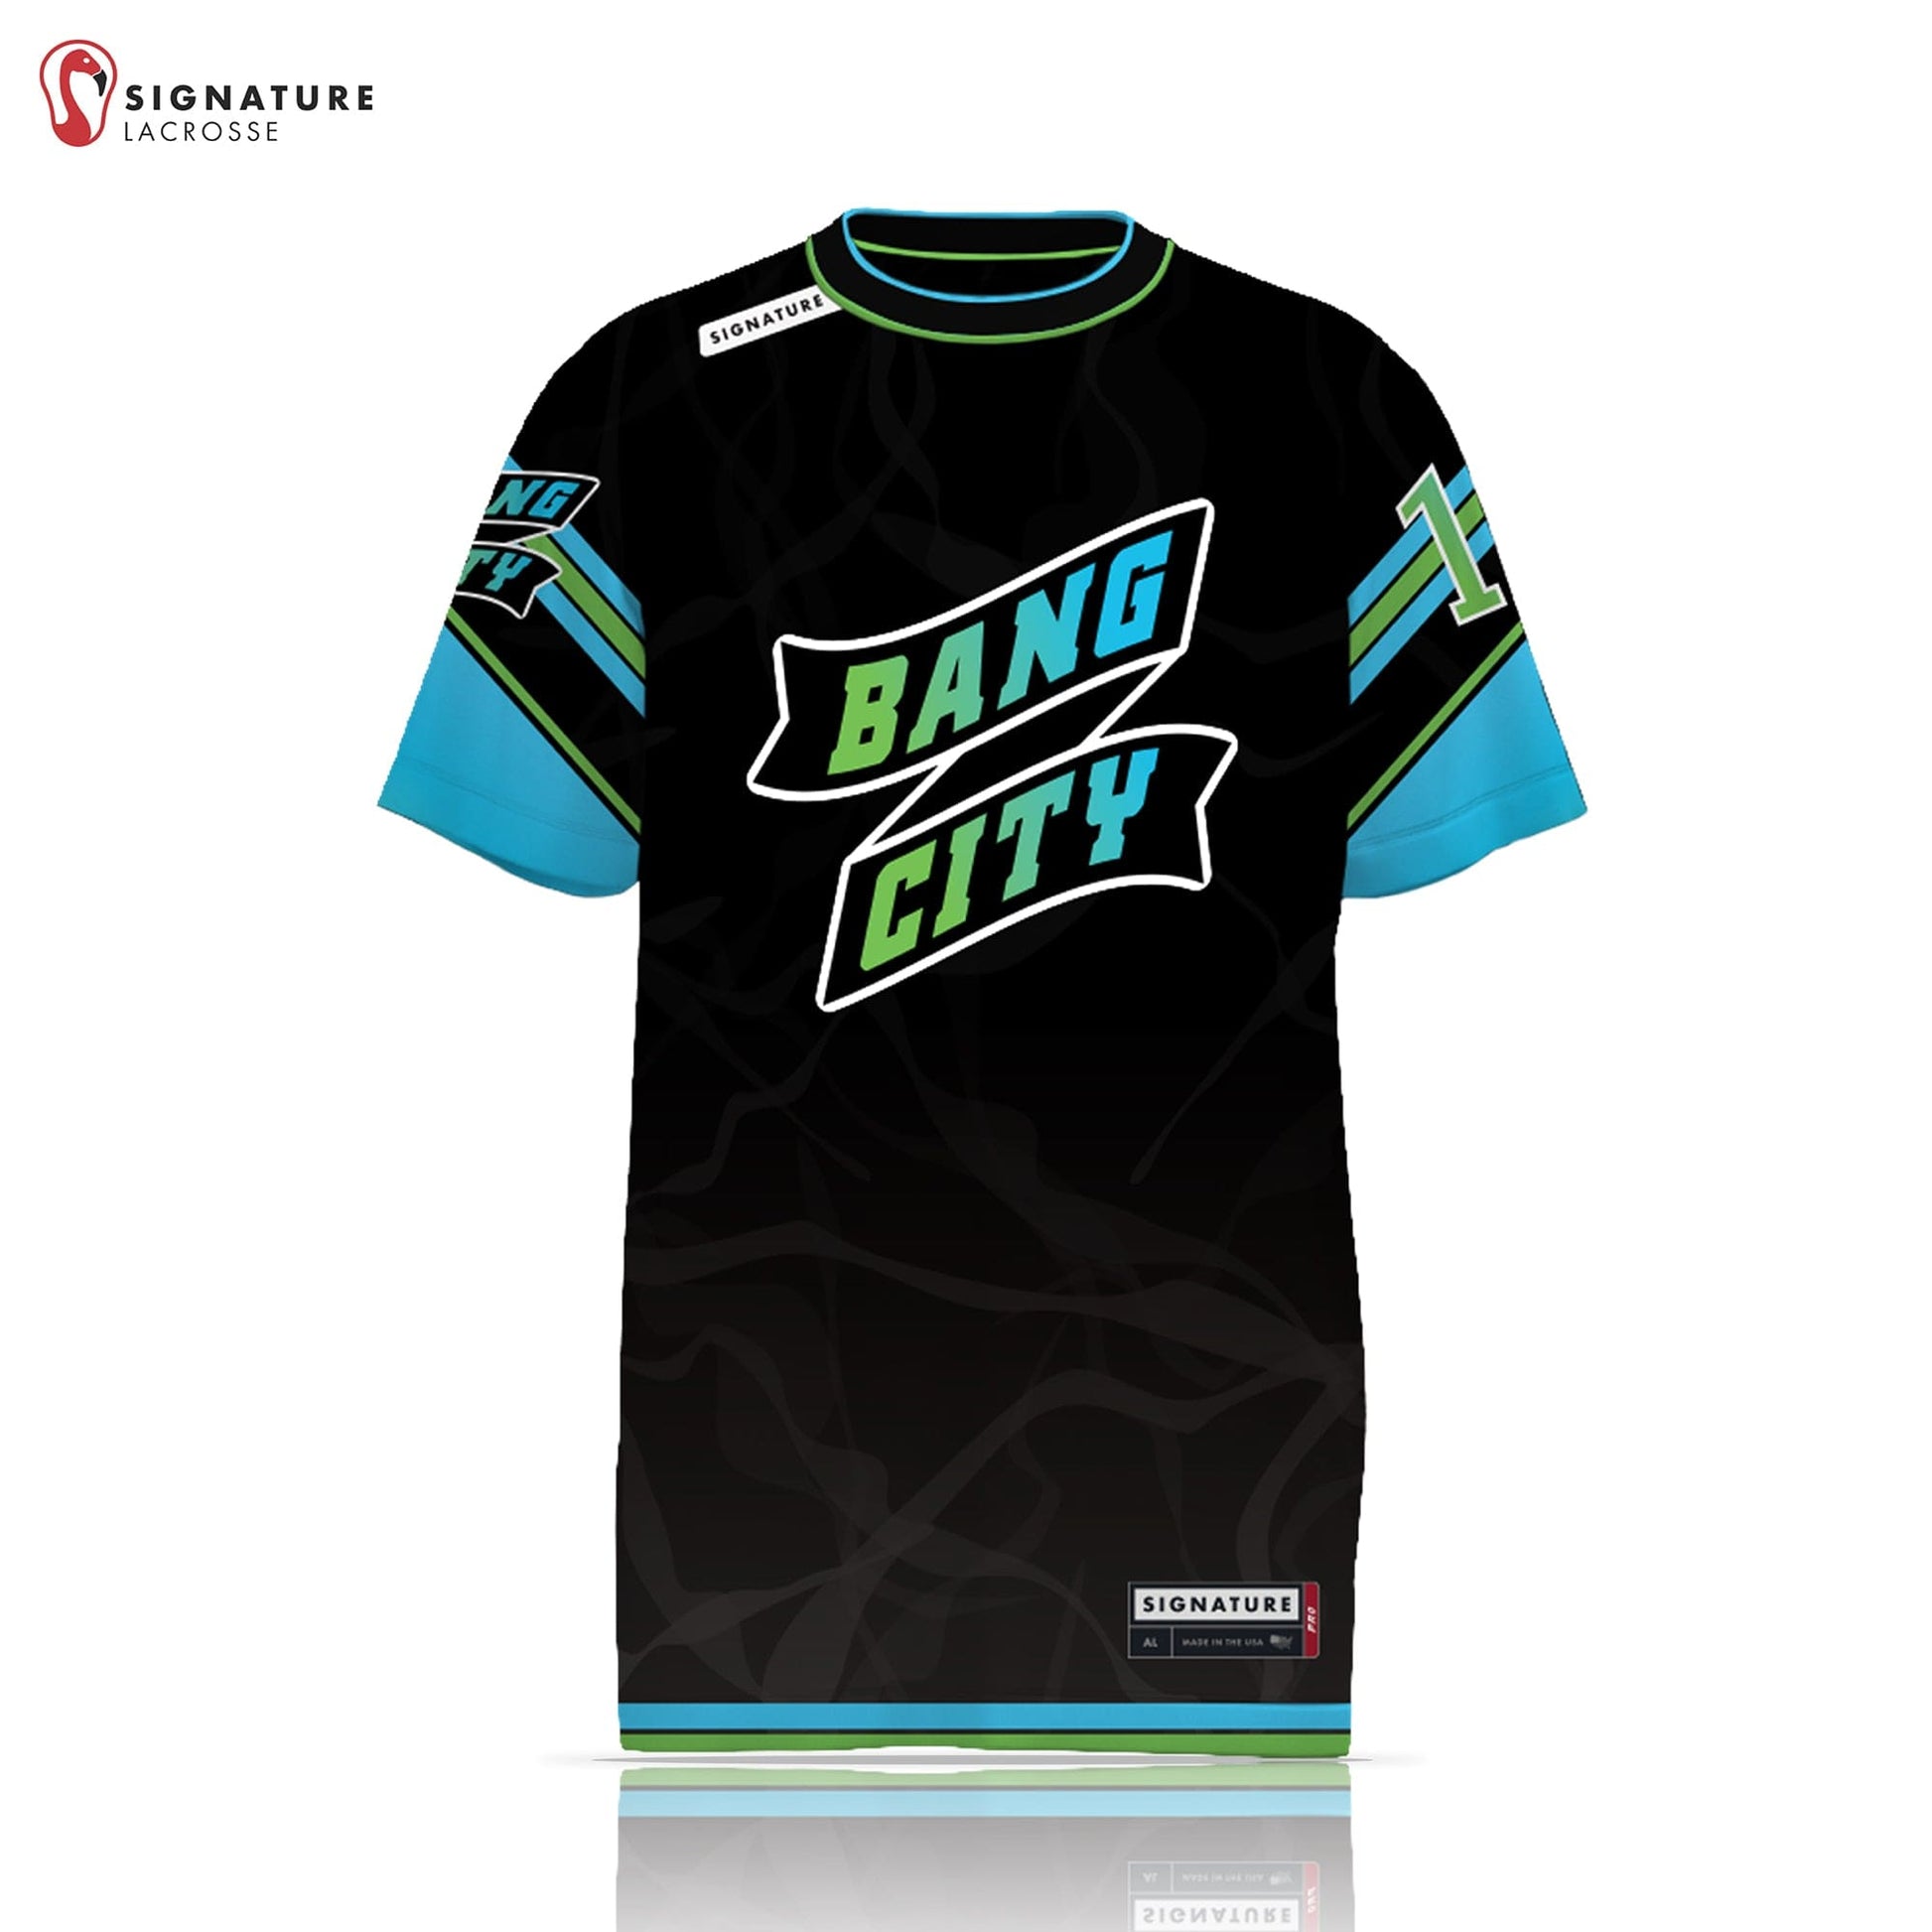 Bang City Lacrosse Men's Player Short Sleeve Shooter Shirt Signature Lacrosse